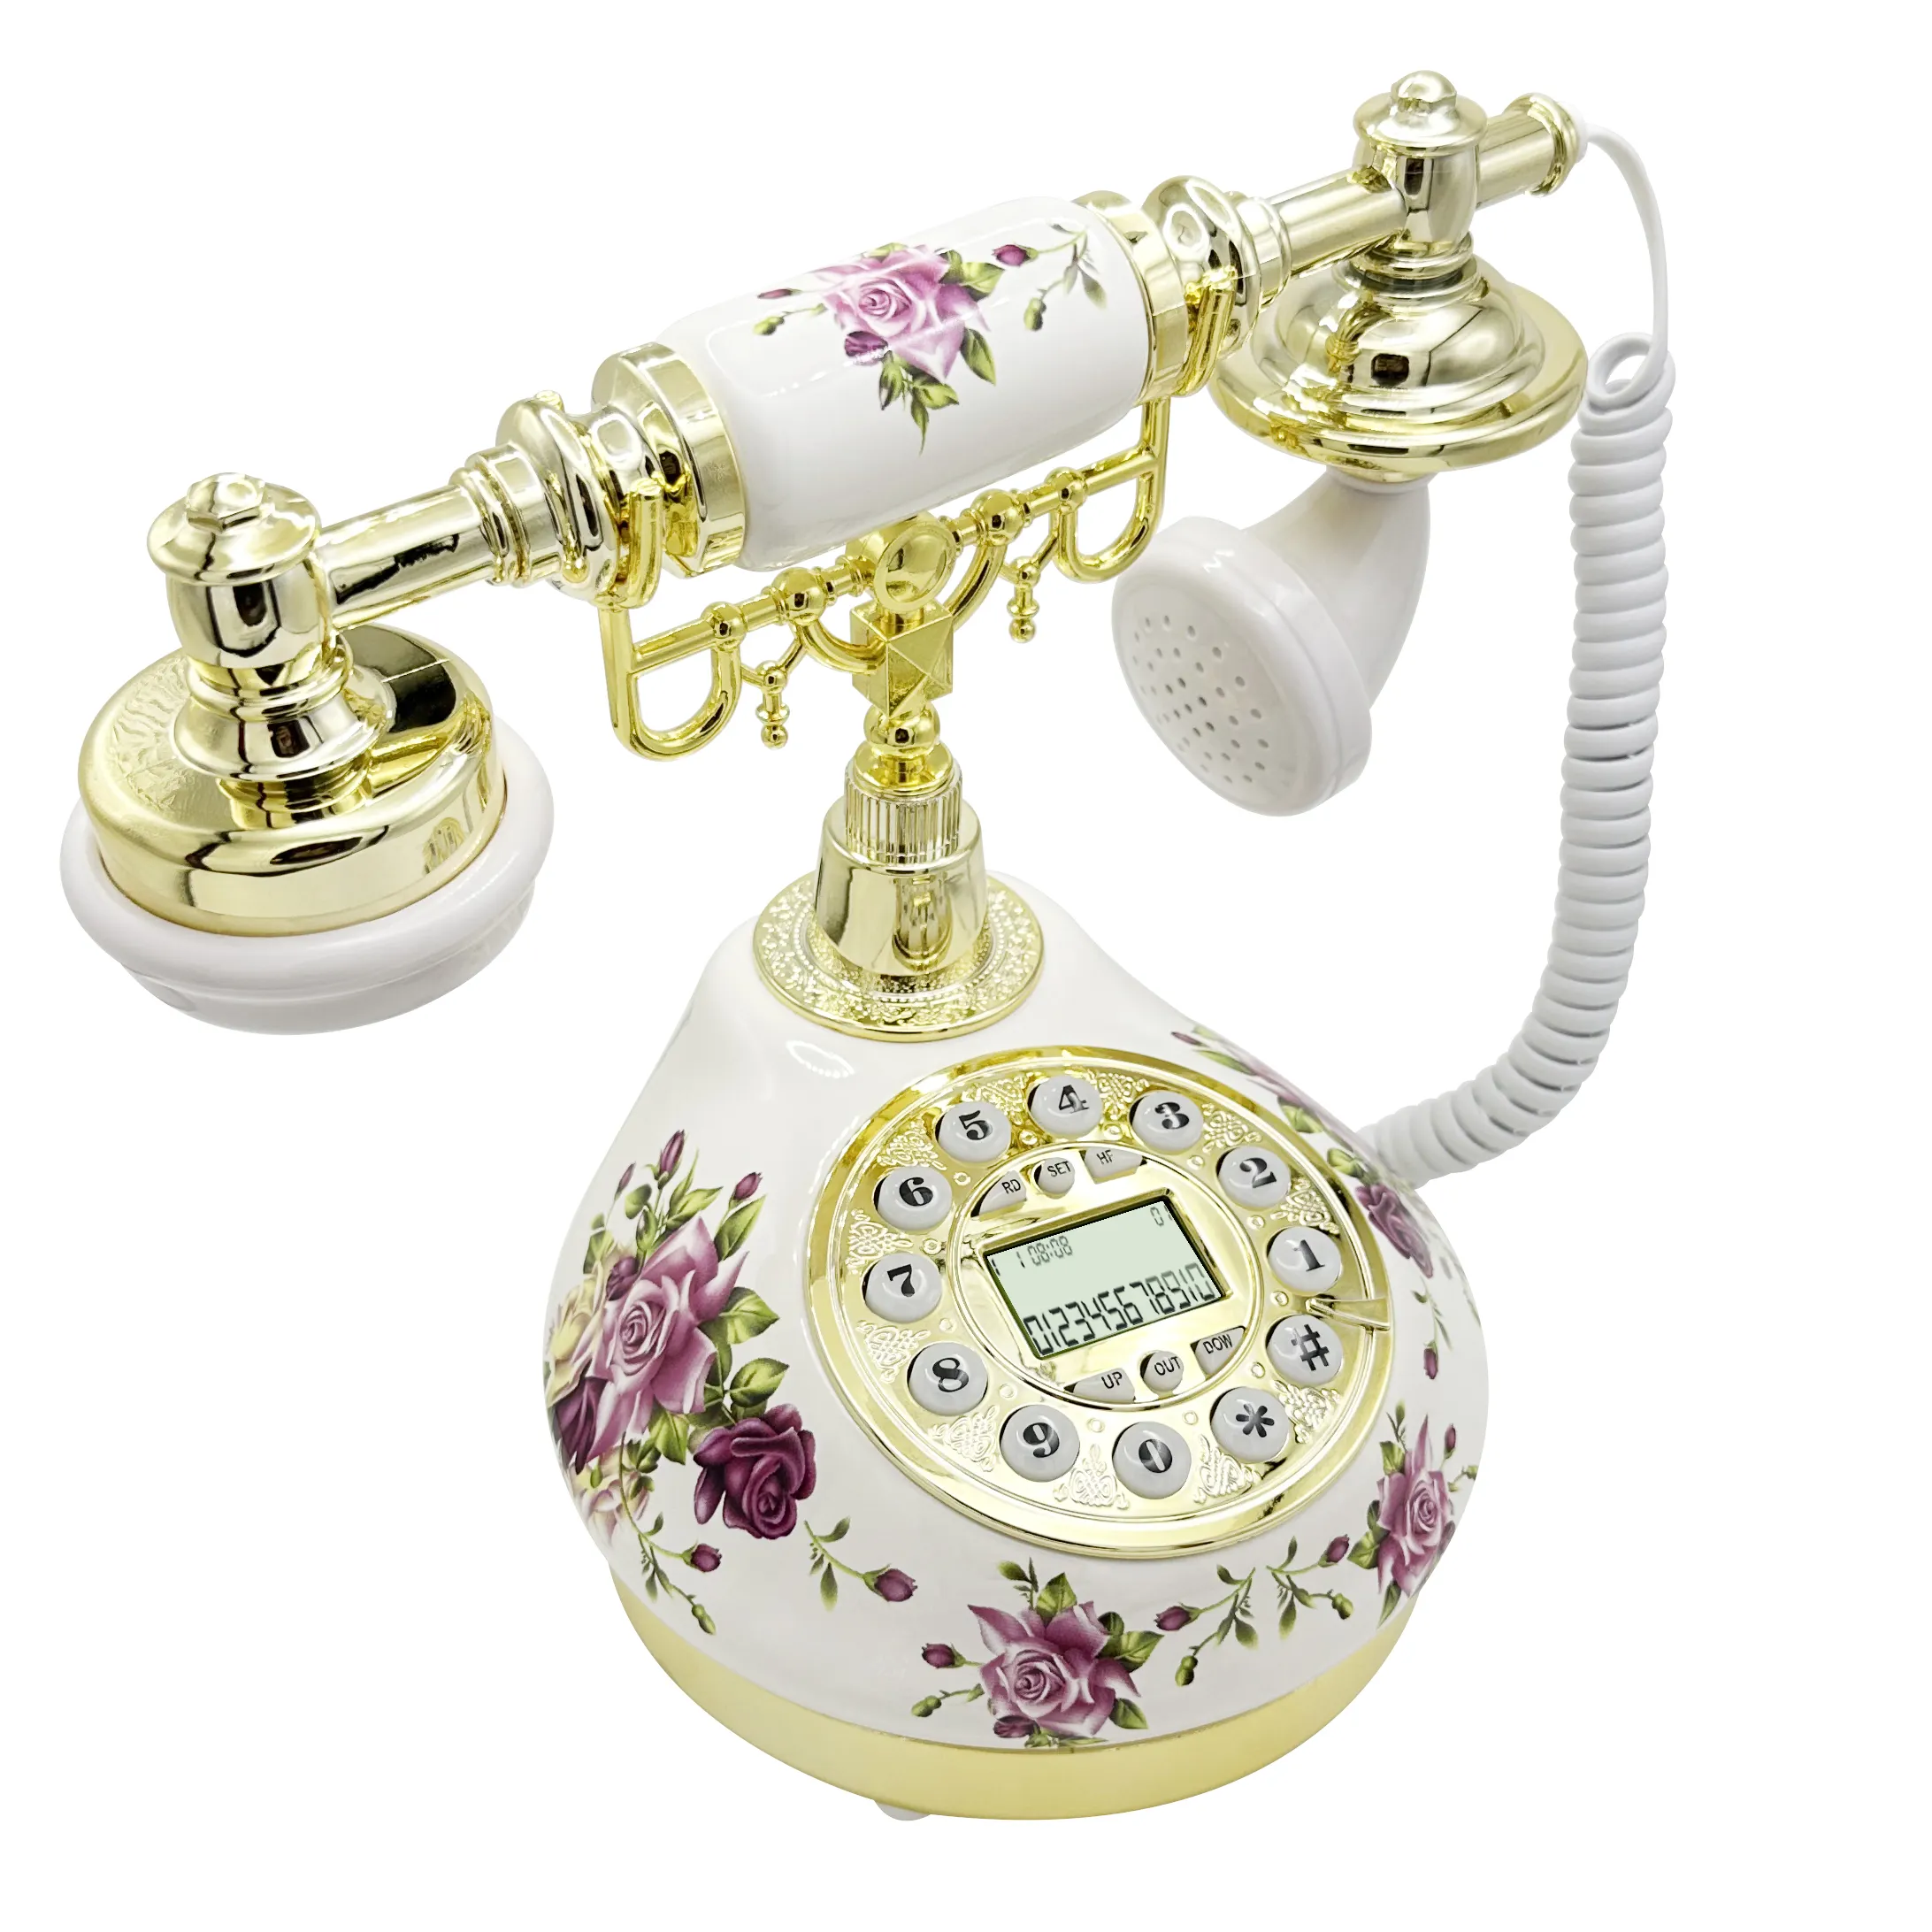 Wired Office Home Multifunktional Ein Telefon mit Anrufer-ID Festnetz Antikes Telefonset Audio-Gästebuch Vintage-Telefon